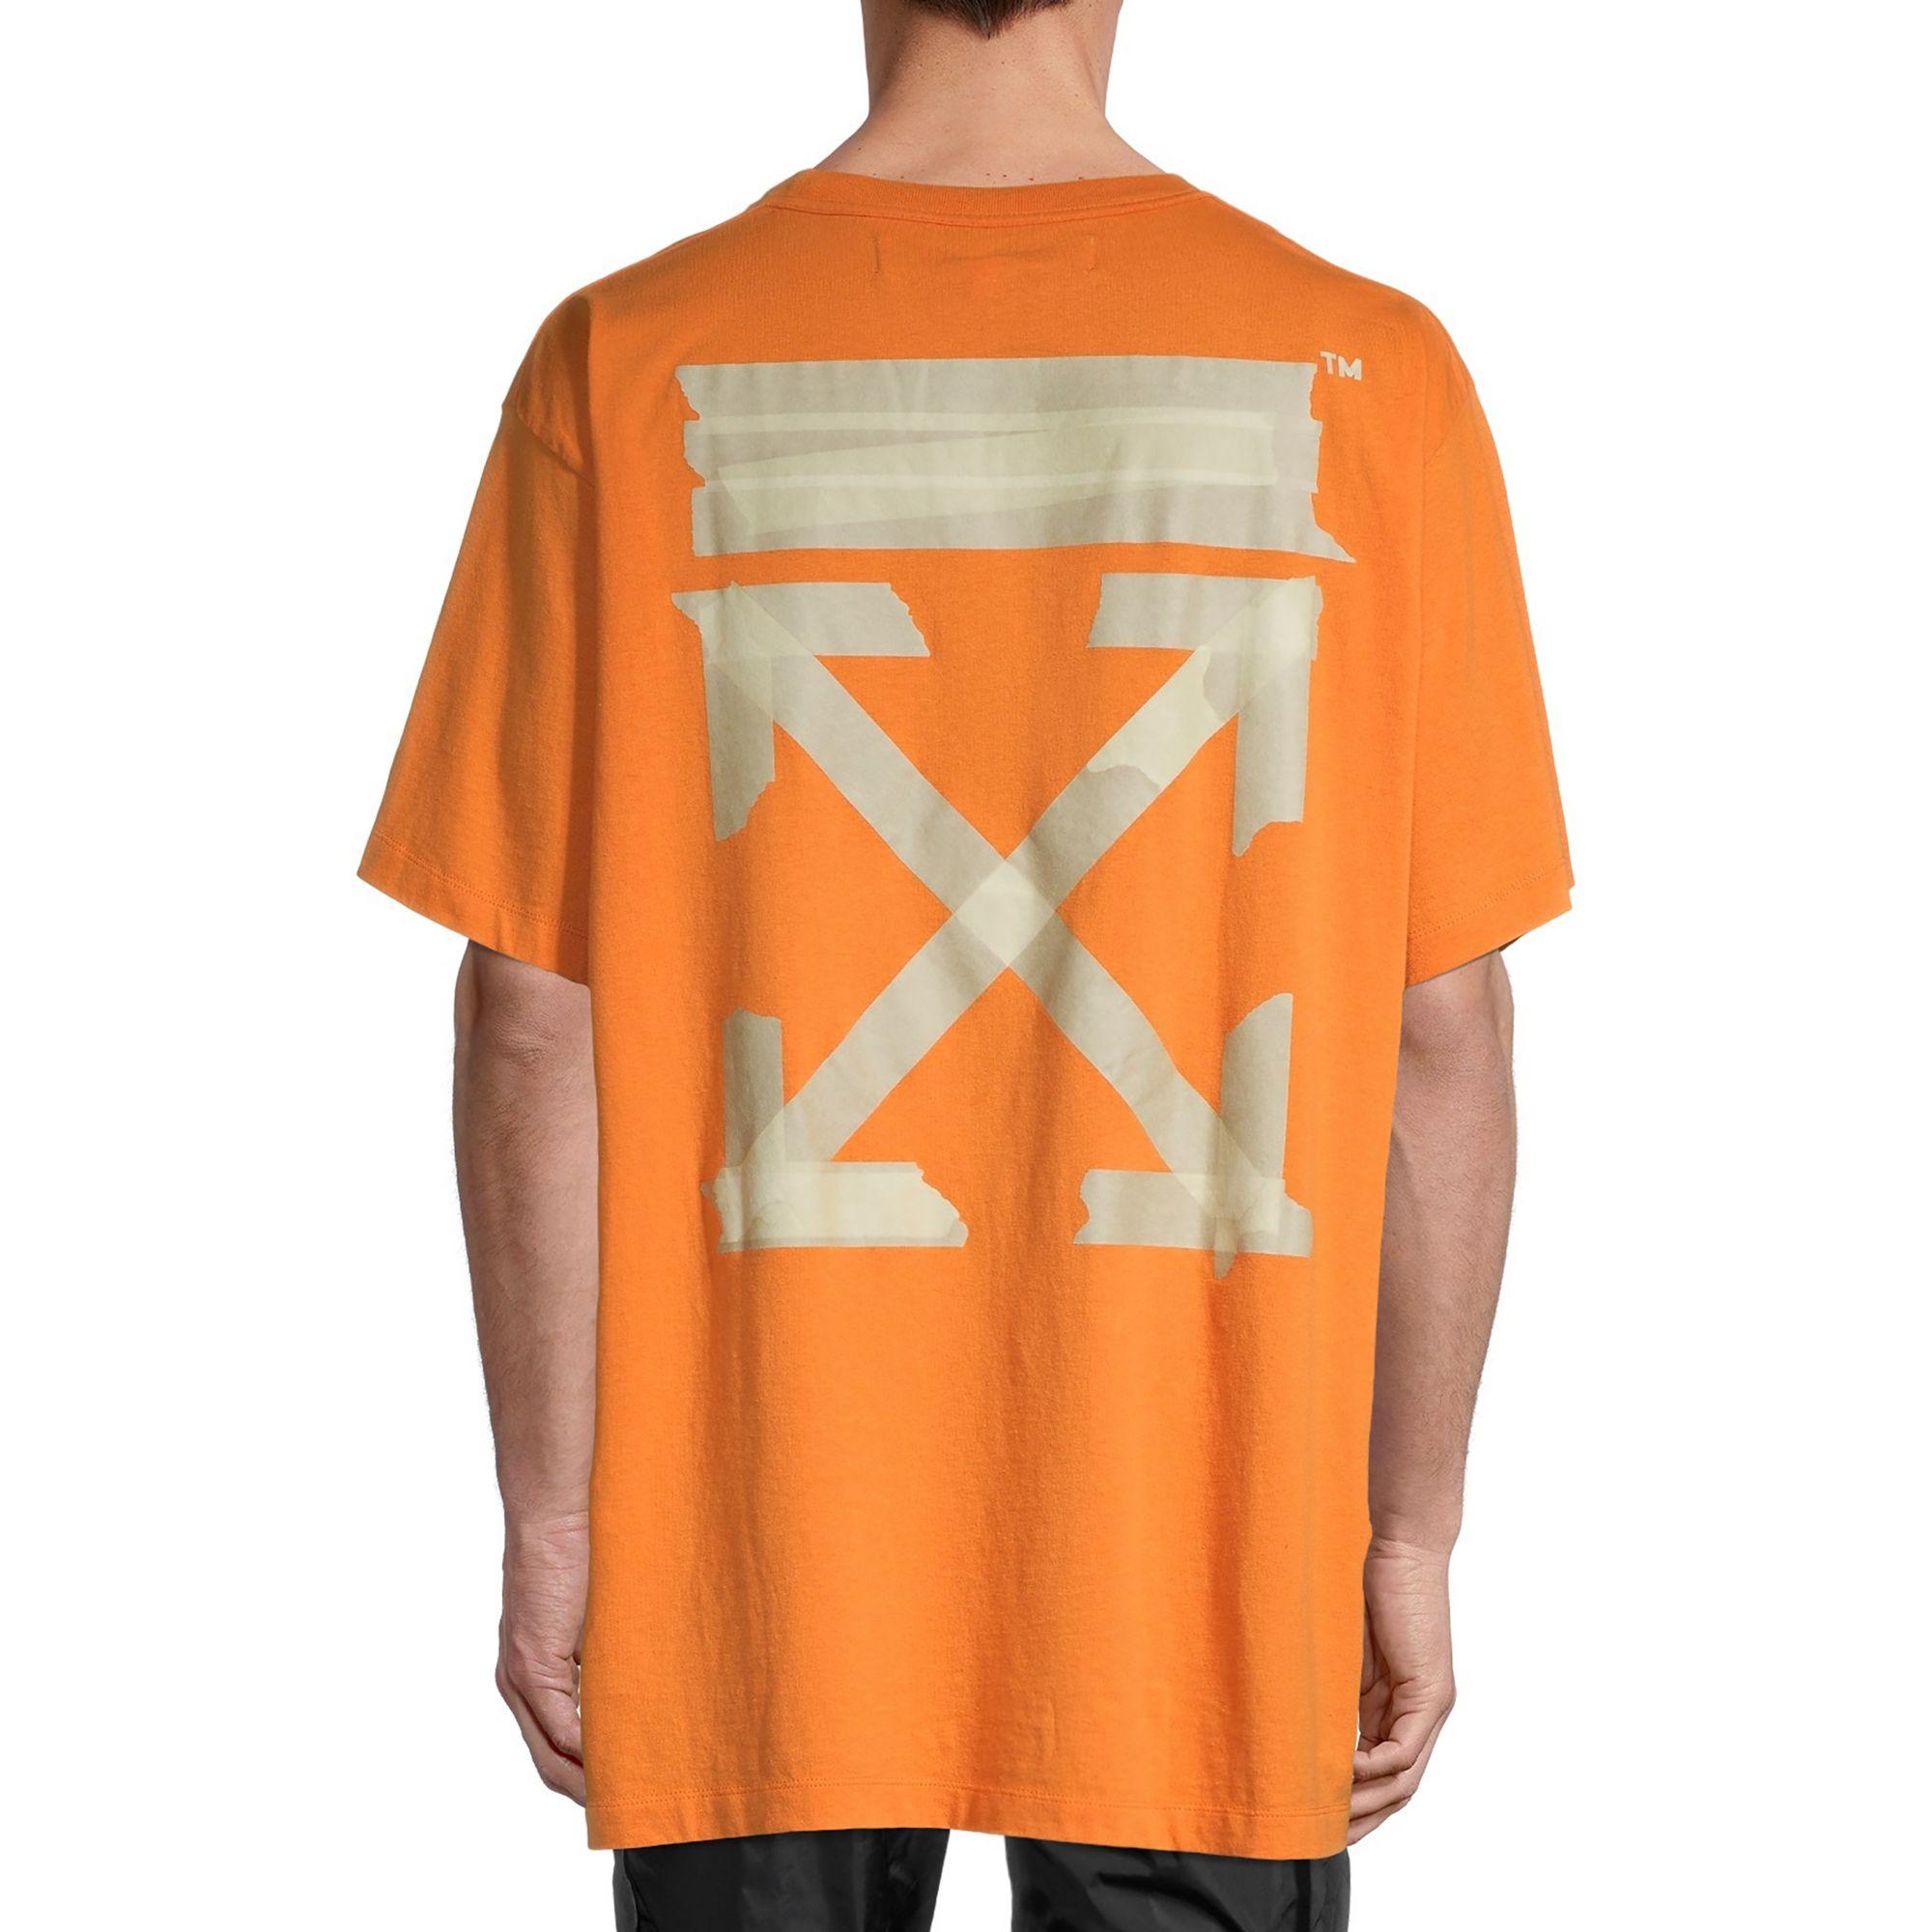 OFF-WHITE Arrow Printing Round Neck Short Sleeve T-Shirt 'Orange' -  OMAA038R201850151910